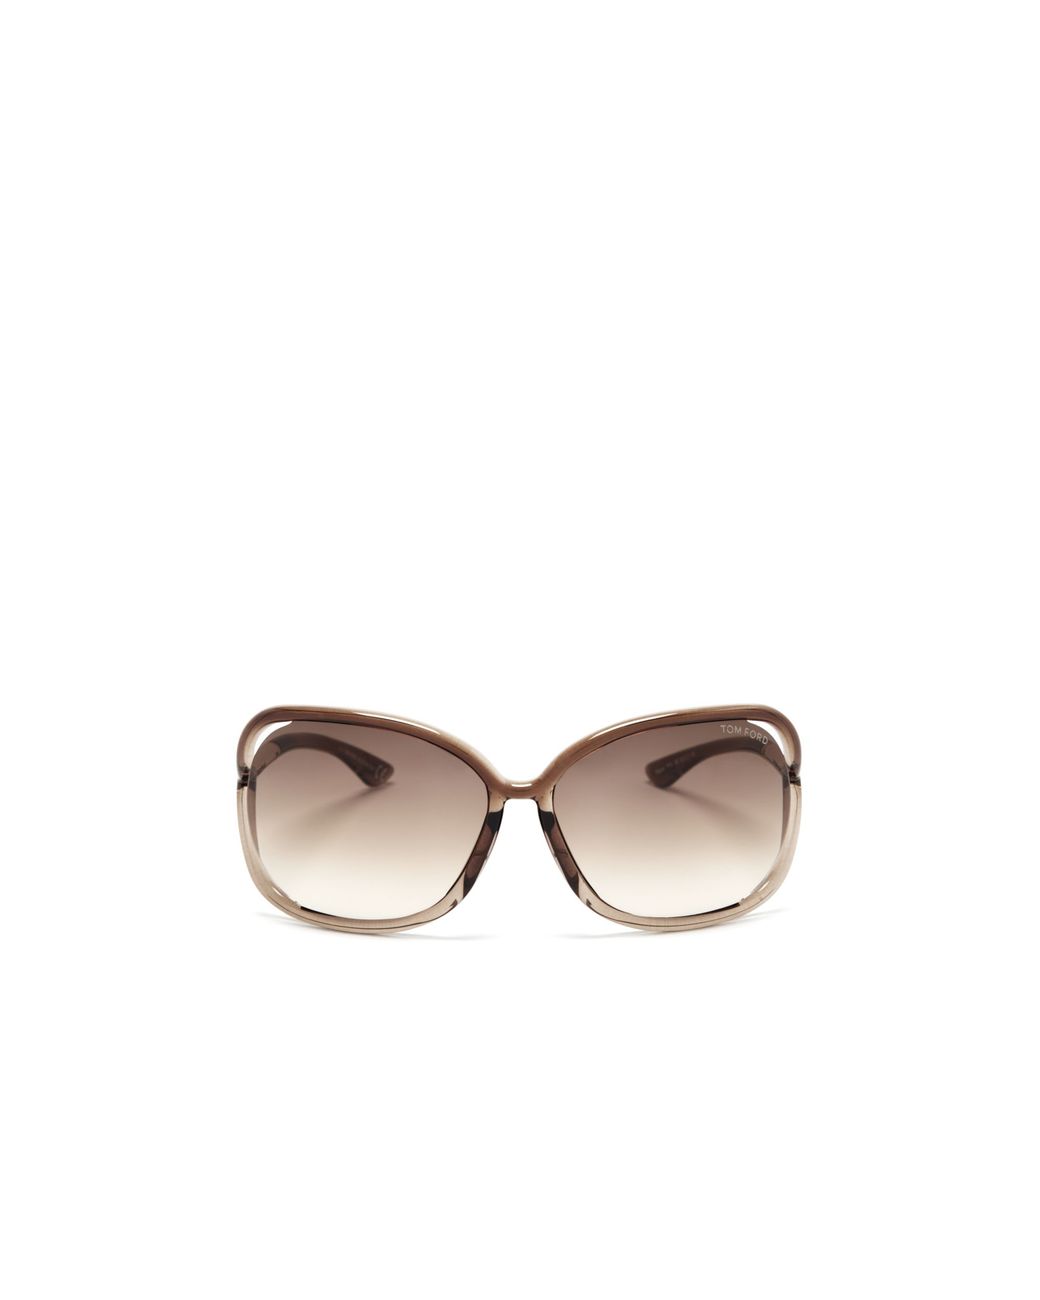 Tom Ford Raquel Sunglasses, 63mm in Metallic